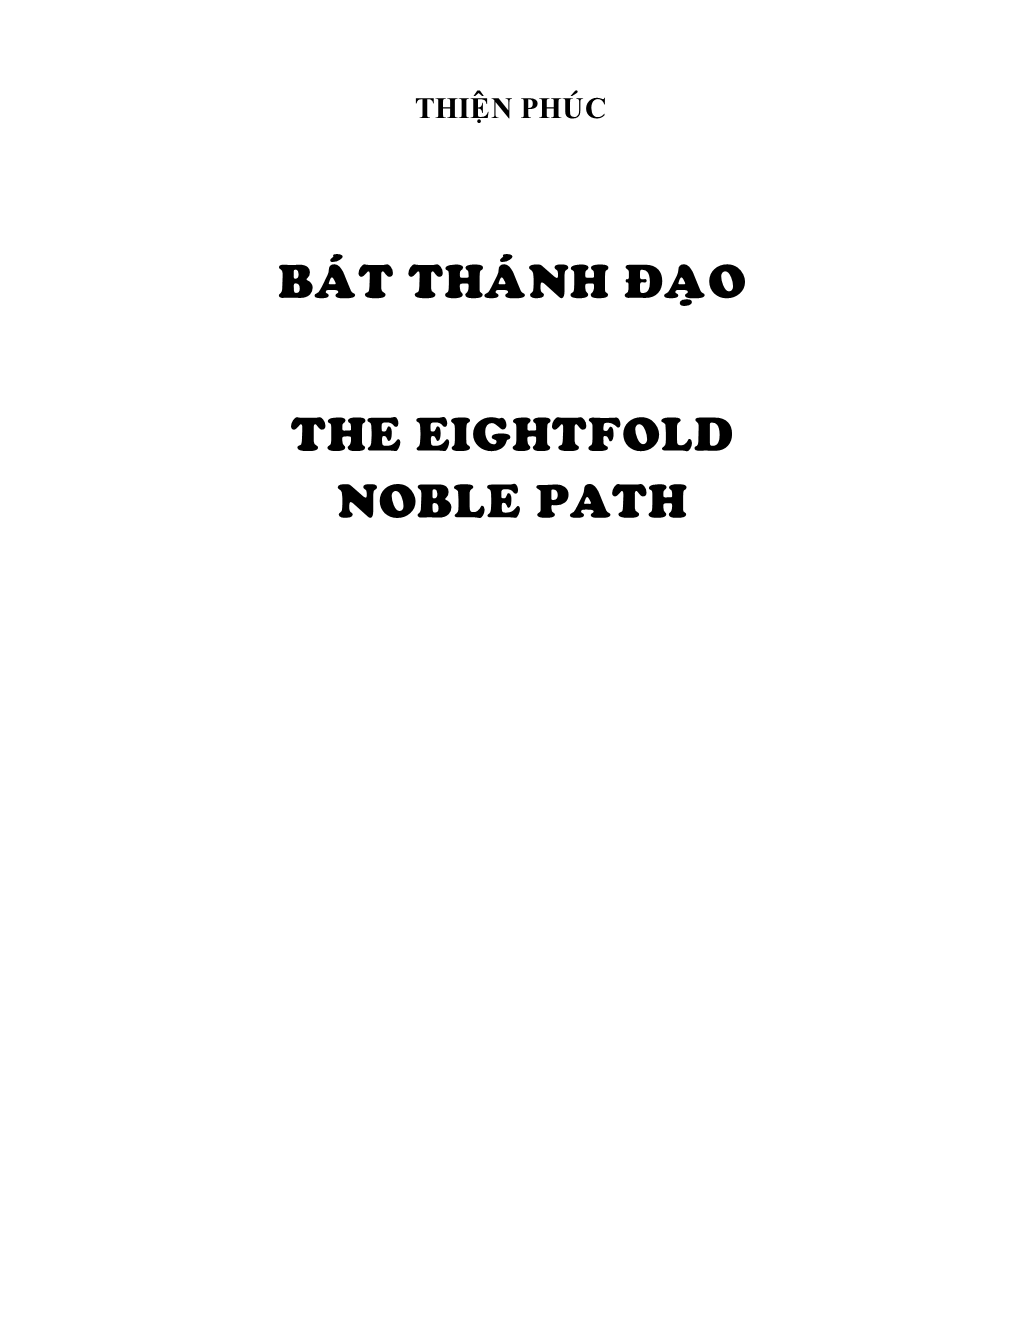 Eightfold Noble Path